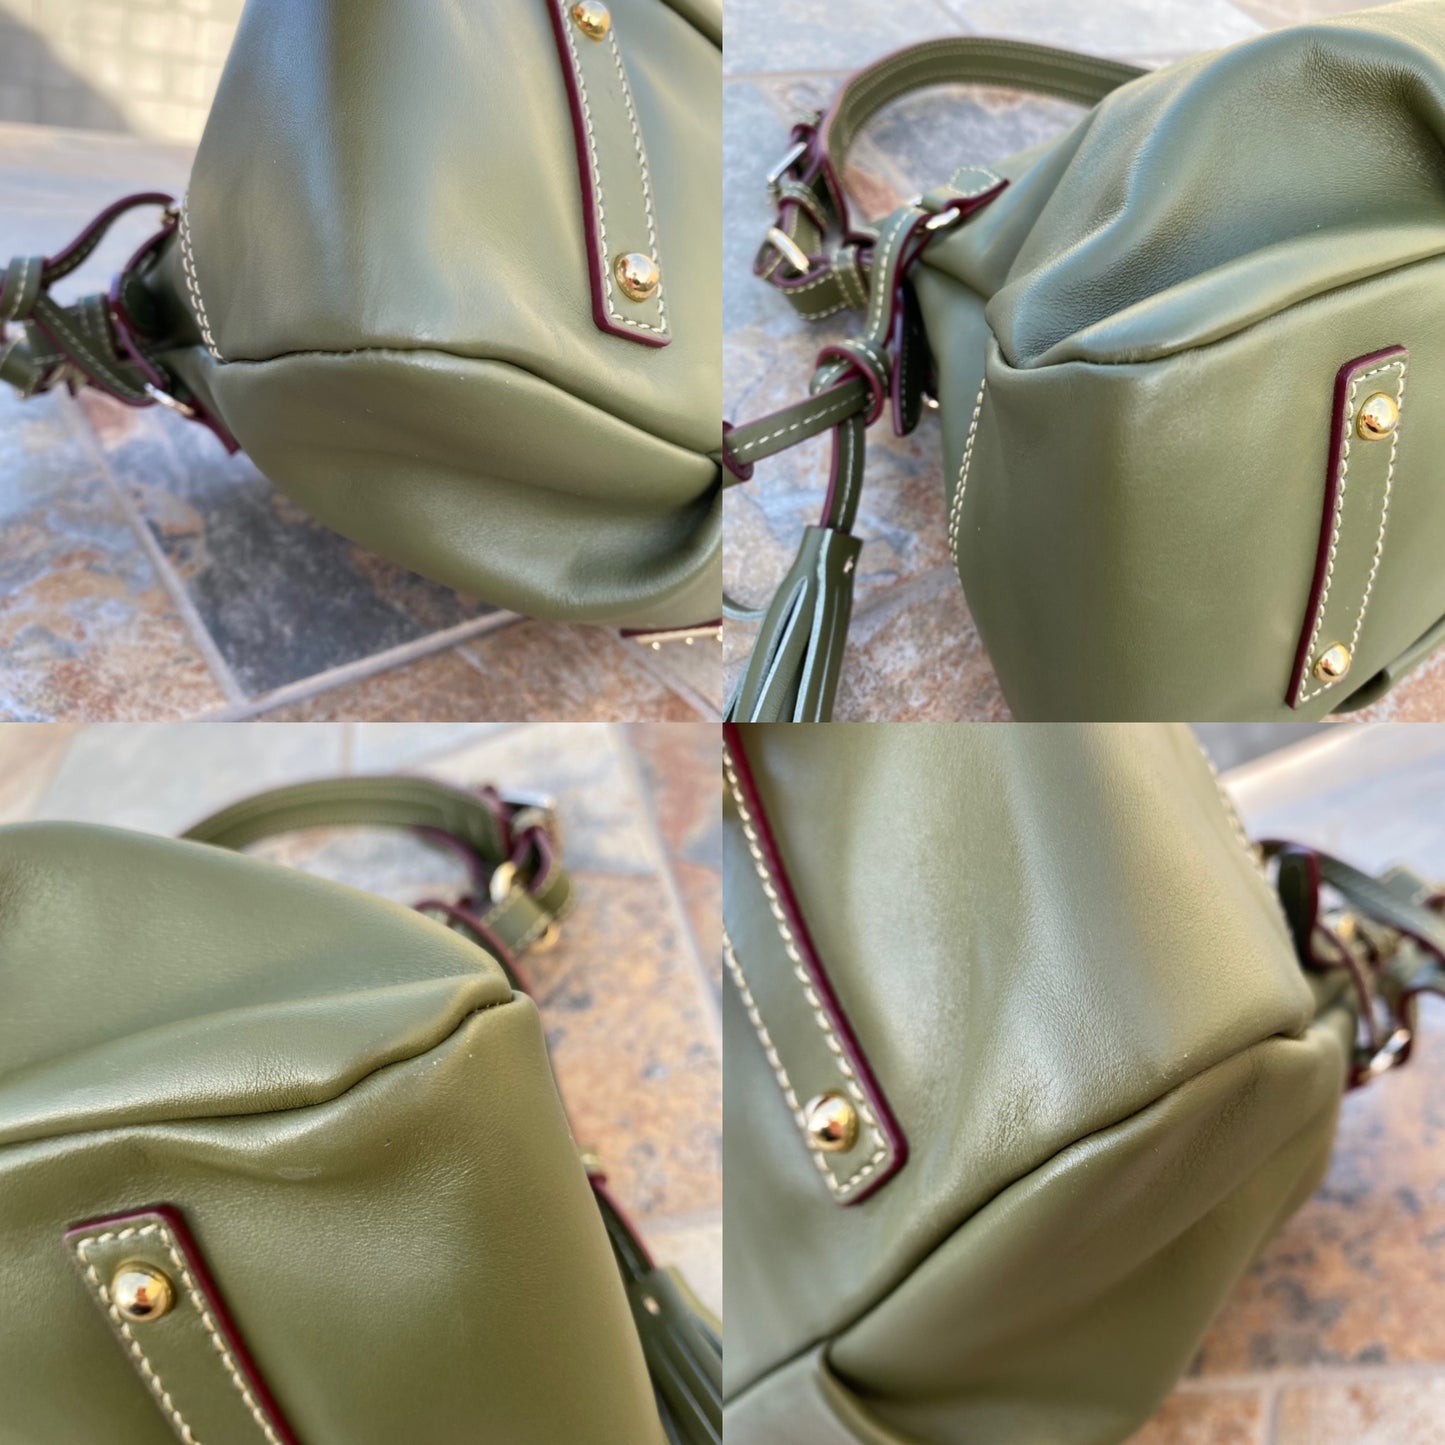 Dooney & Bourke Tegan Leather Hobo Bag with Wallet